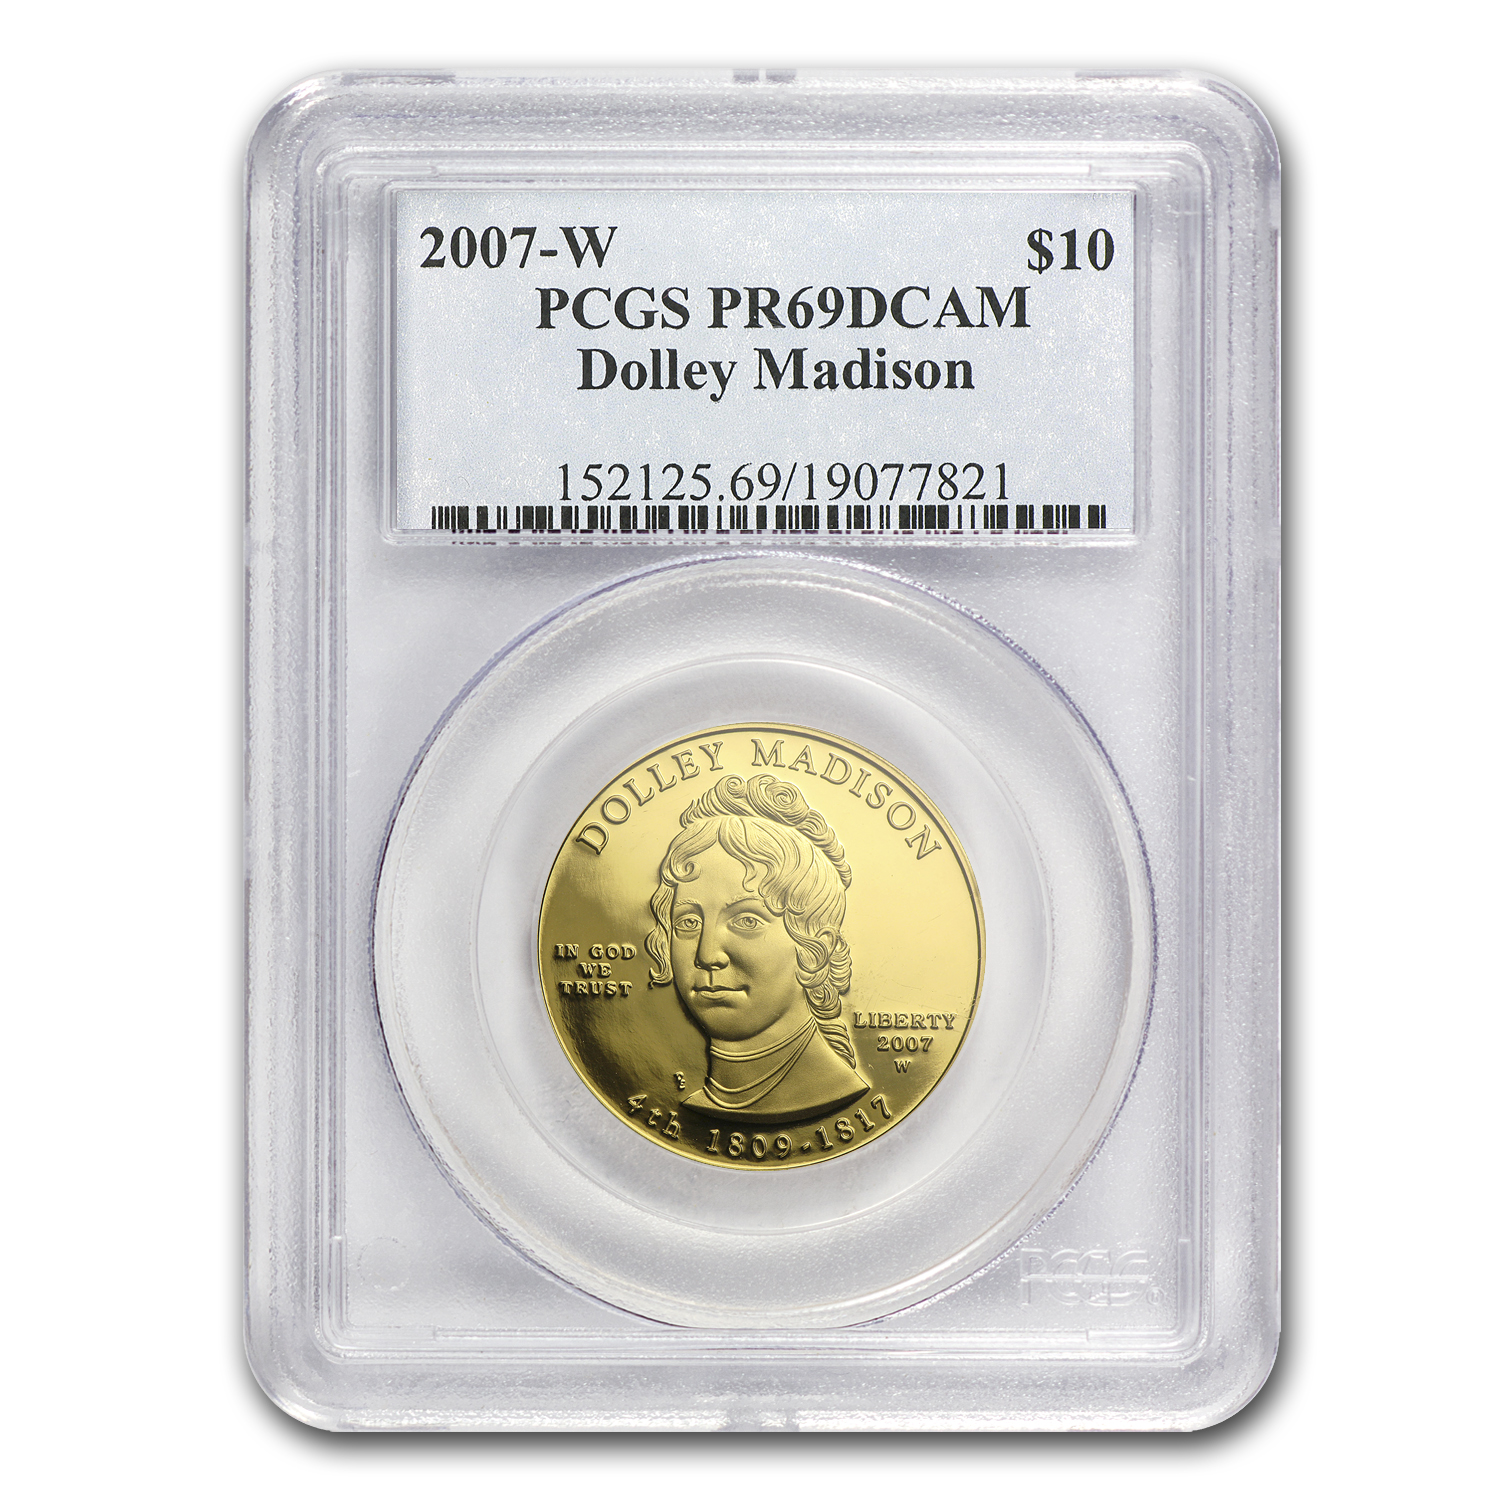 Buy 2007-W 1/2 oz Proof Gold Dolley Madison PR-69 PCGS